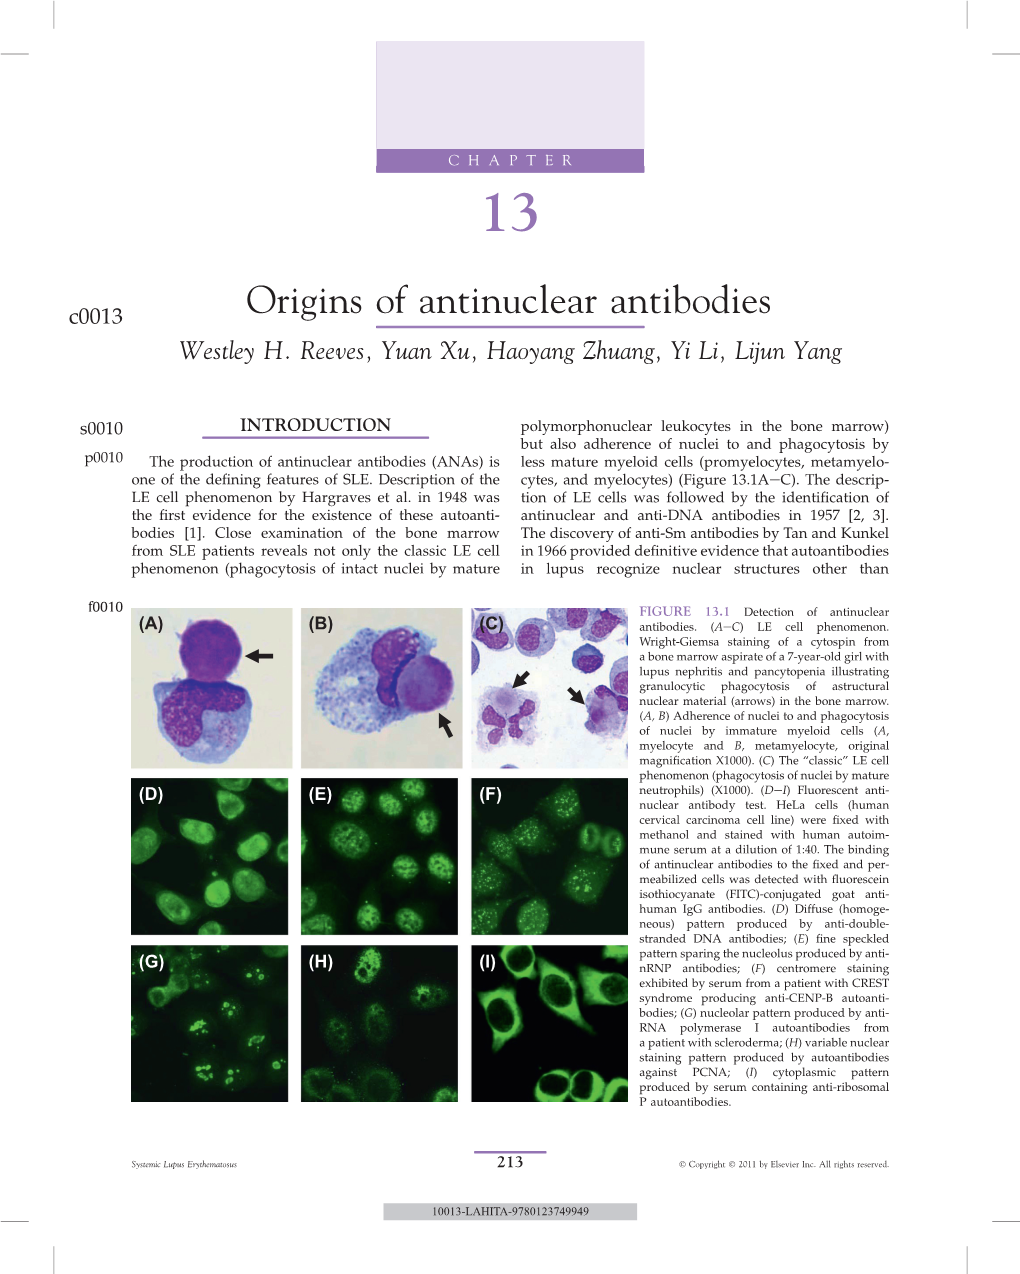 Origins of Antinuclear Antibodies Westley H